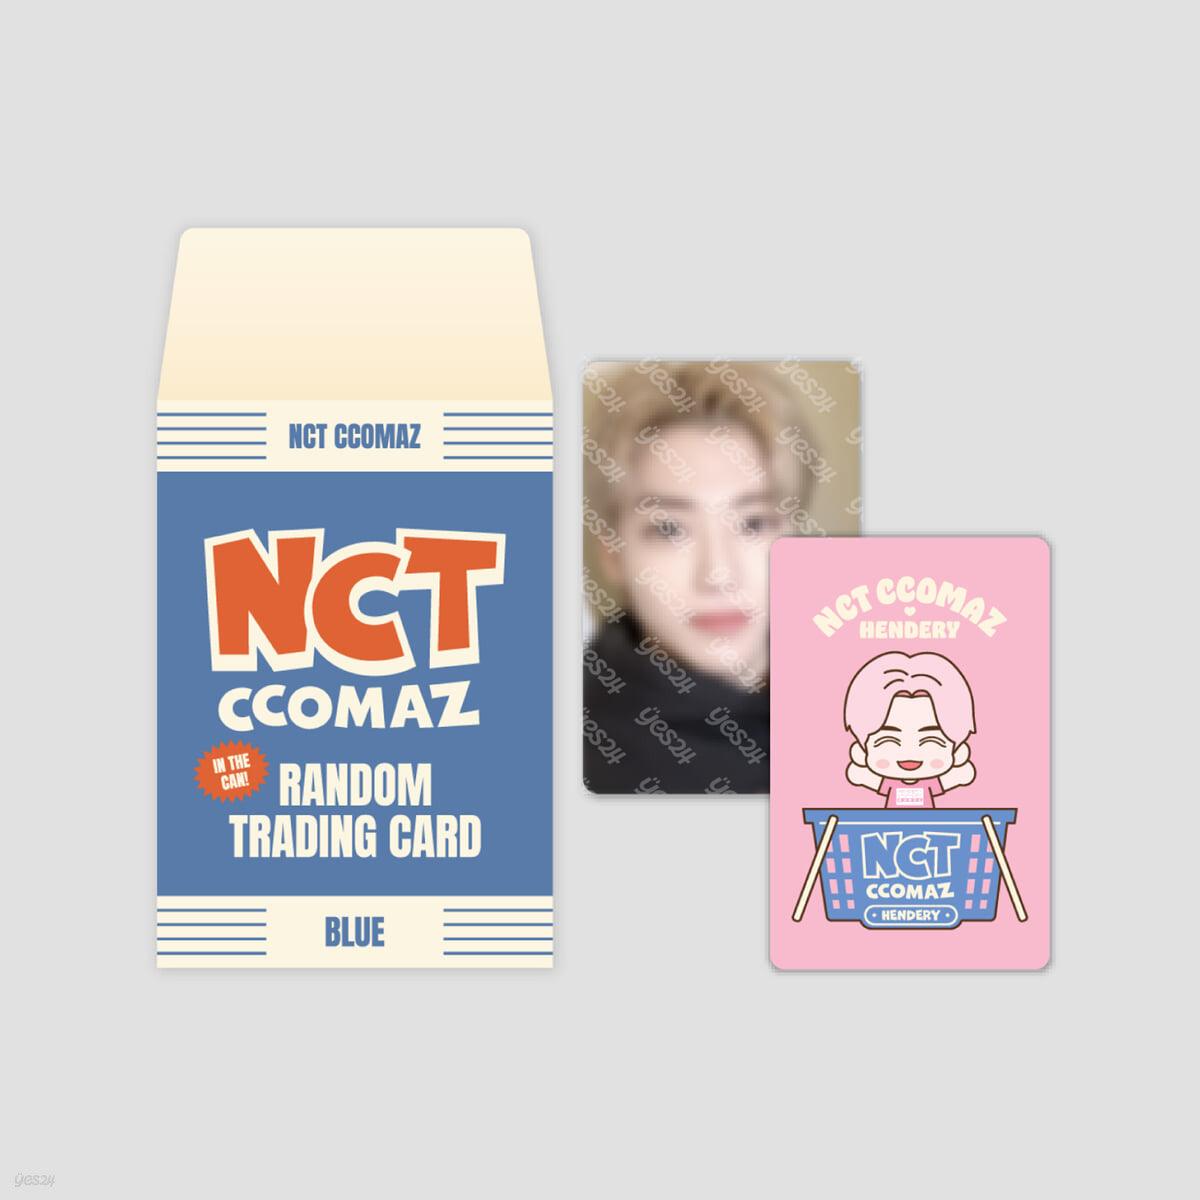 NCT CCOMAZ Trading Card - KKANG